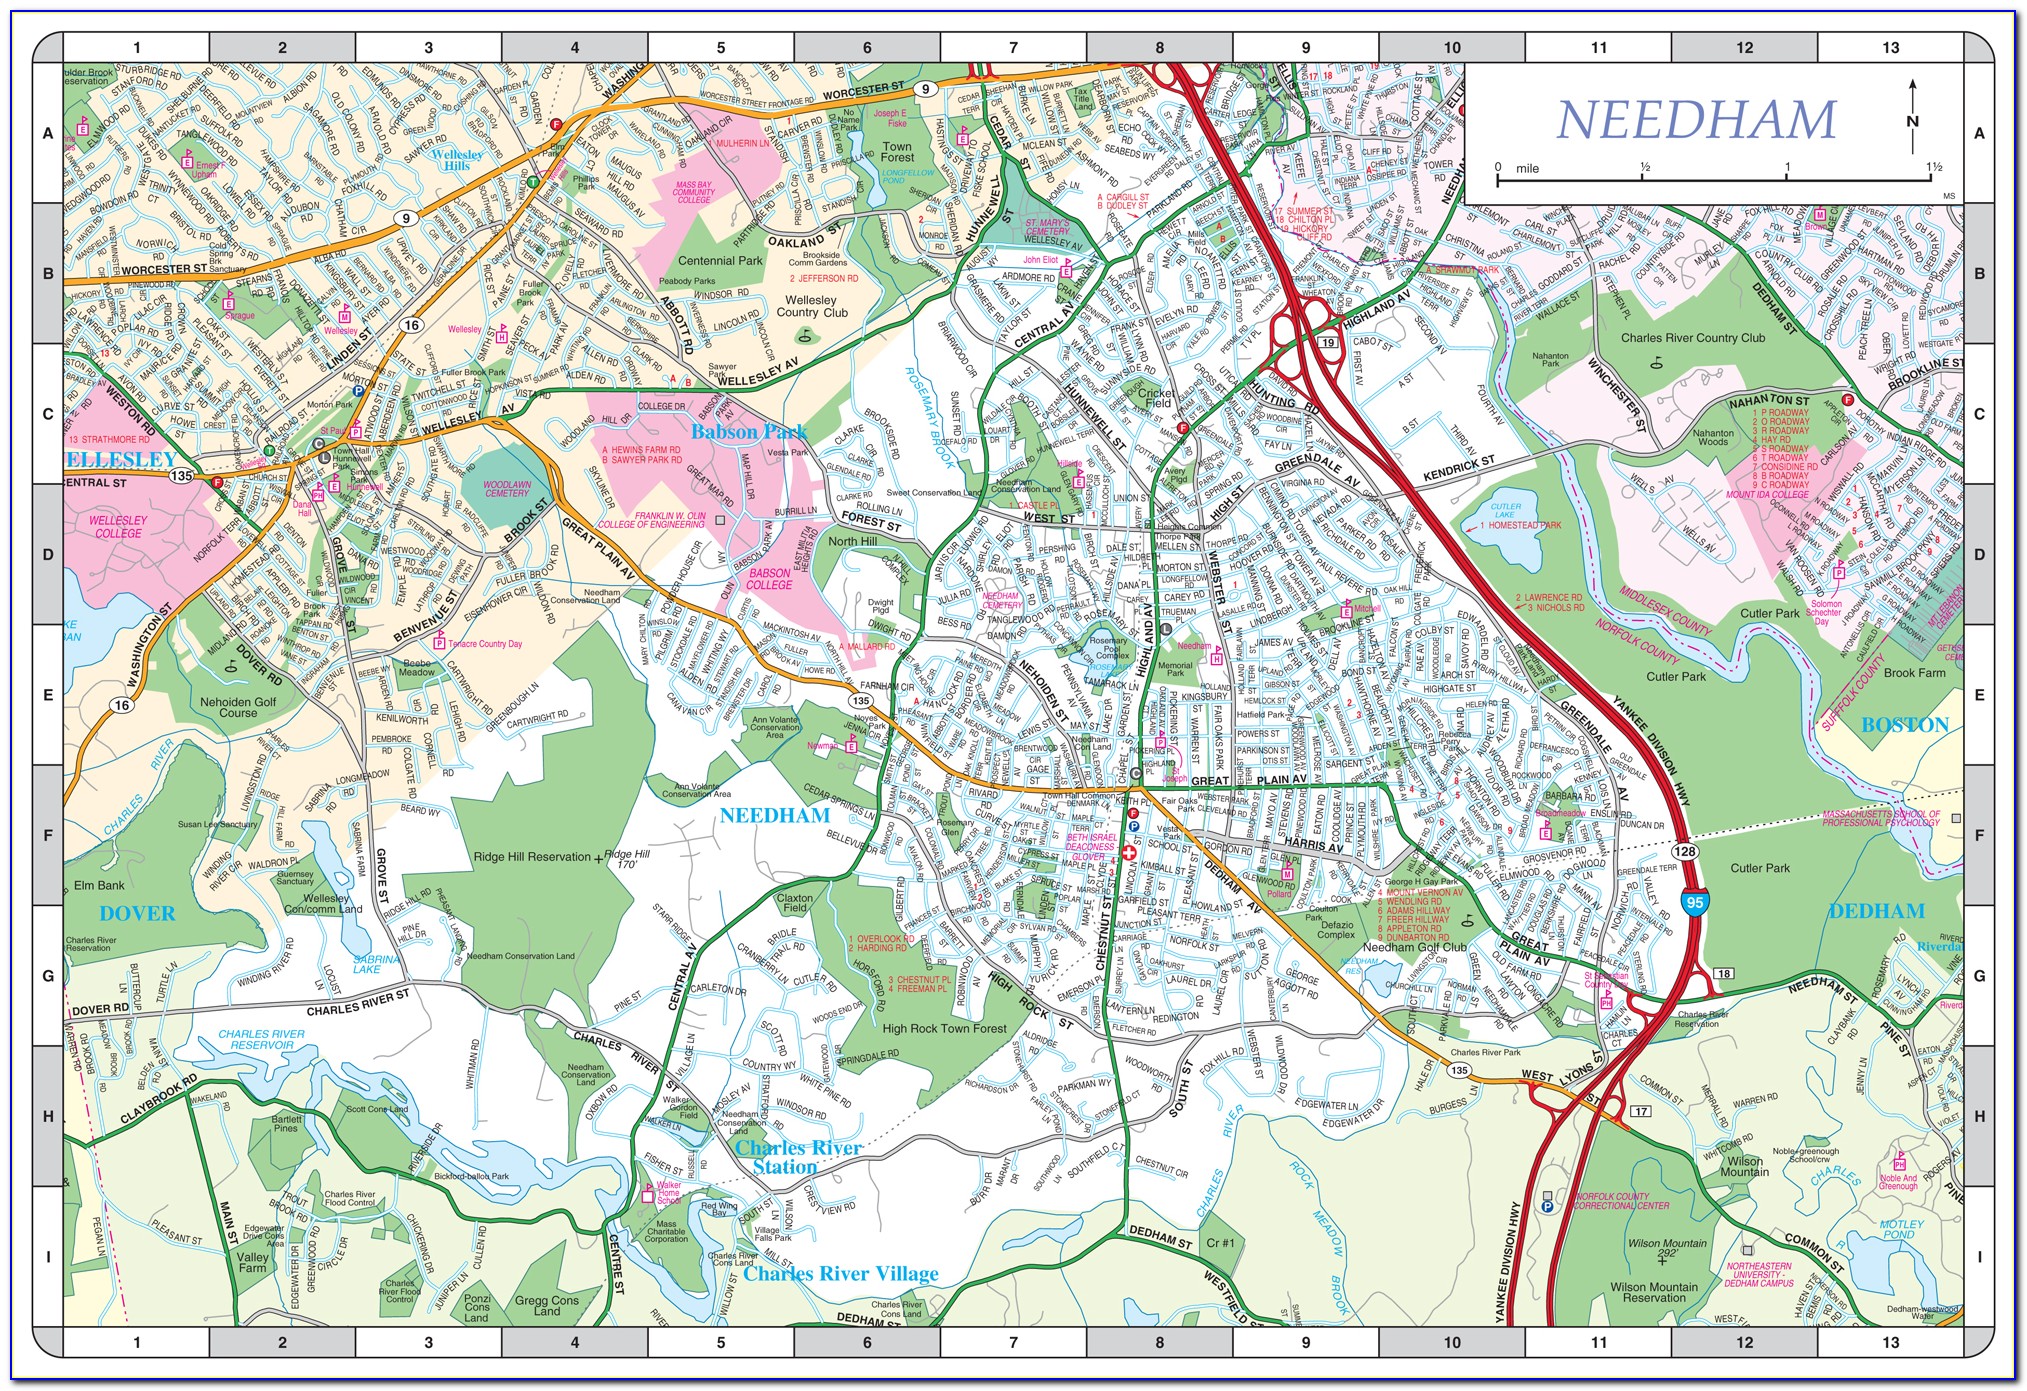 Needham Ma Zoning Map